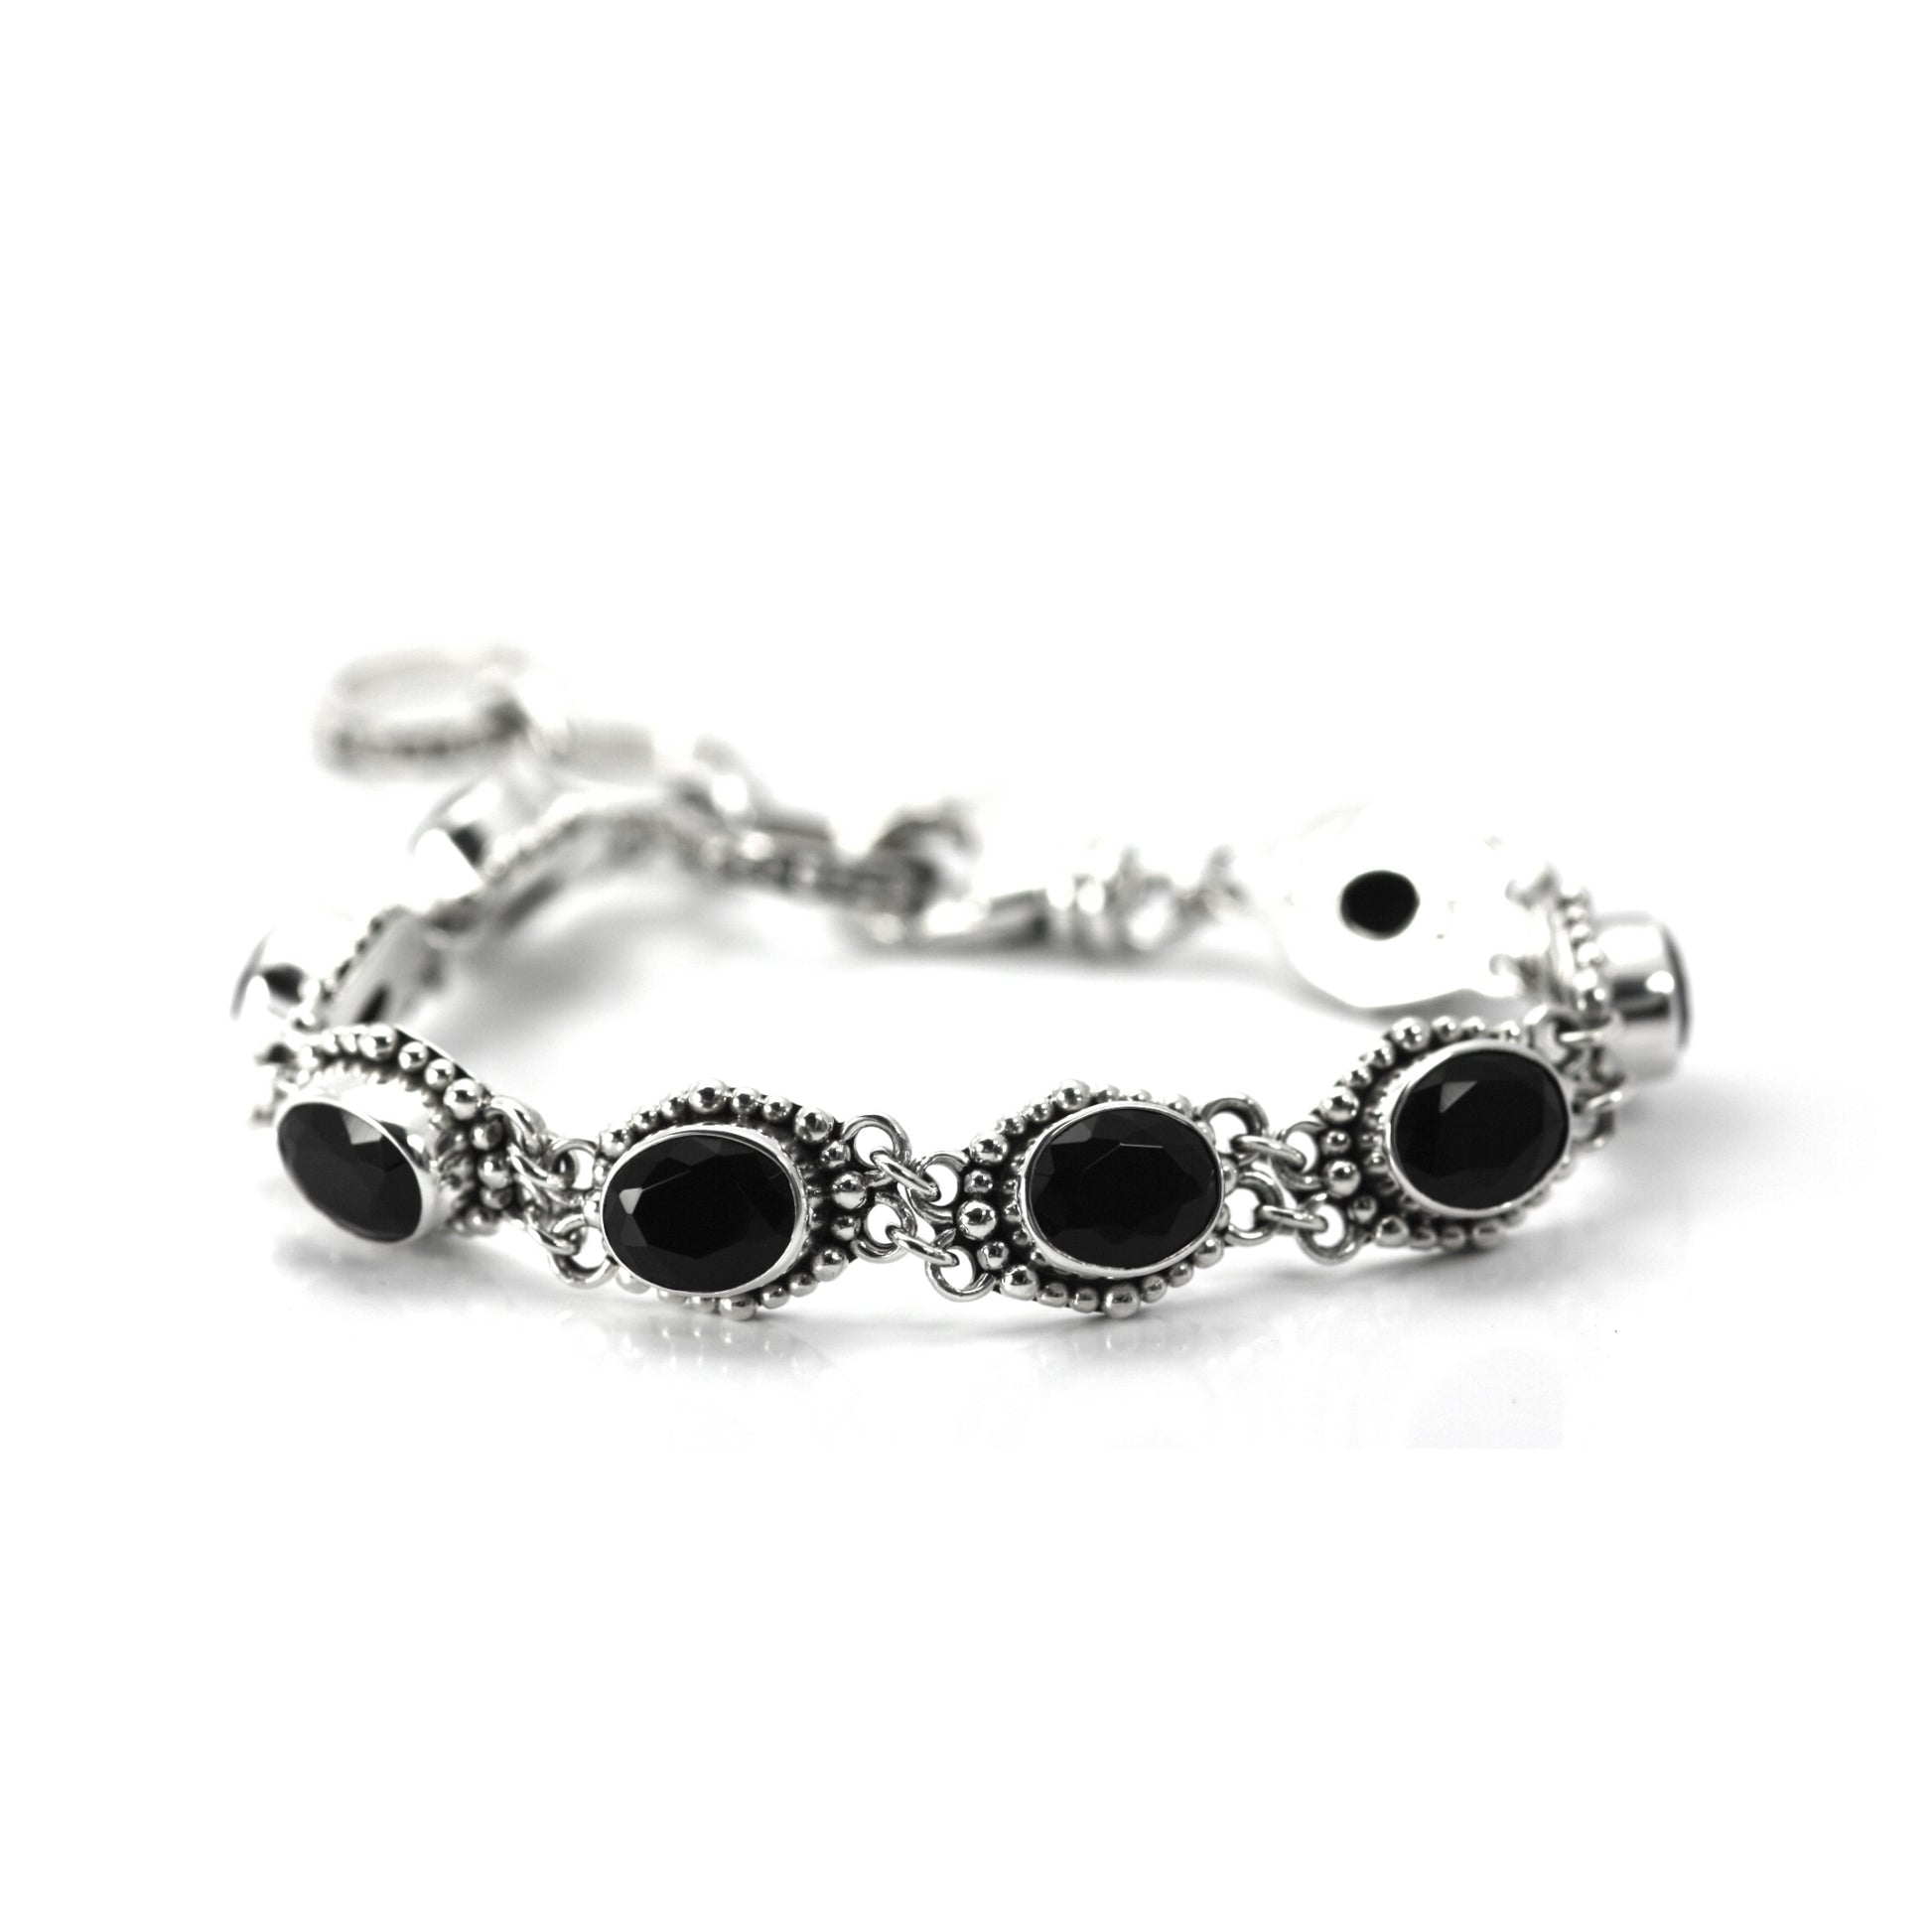 Silver bracelet with nine oval onyx gemstones set in beaded links.